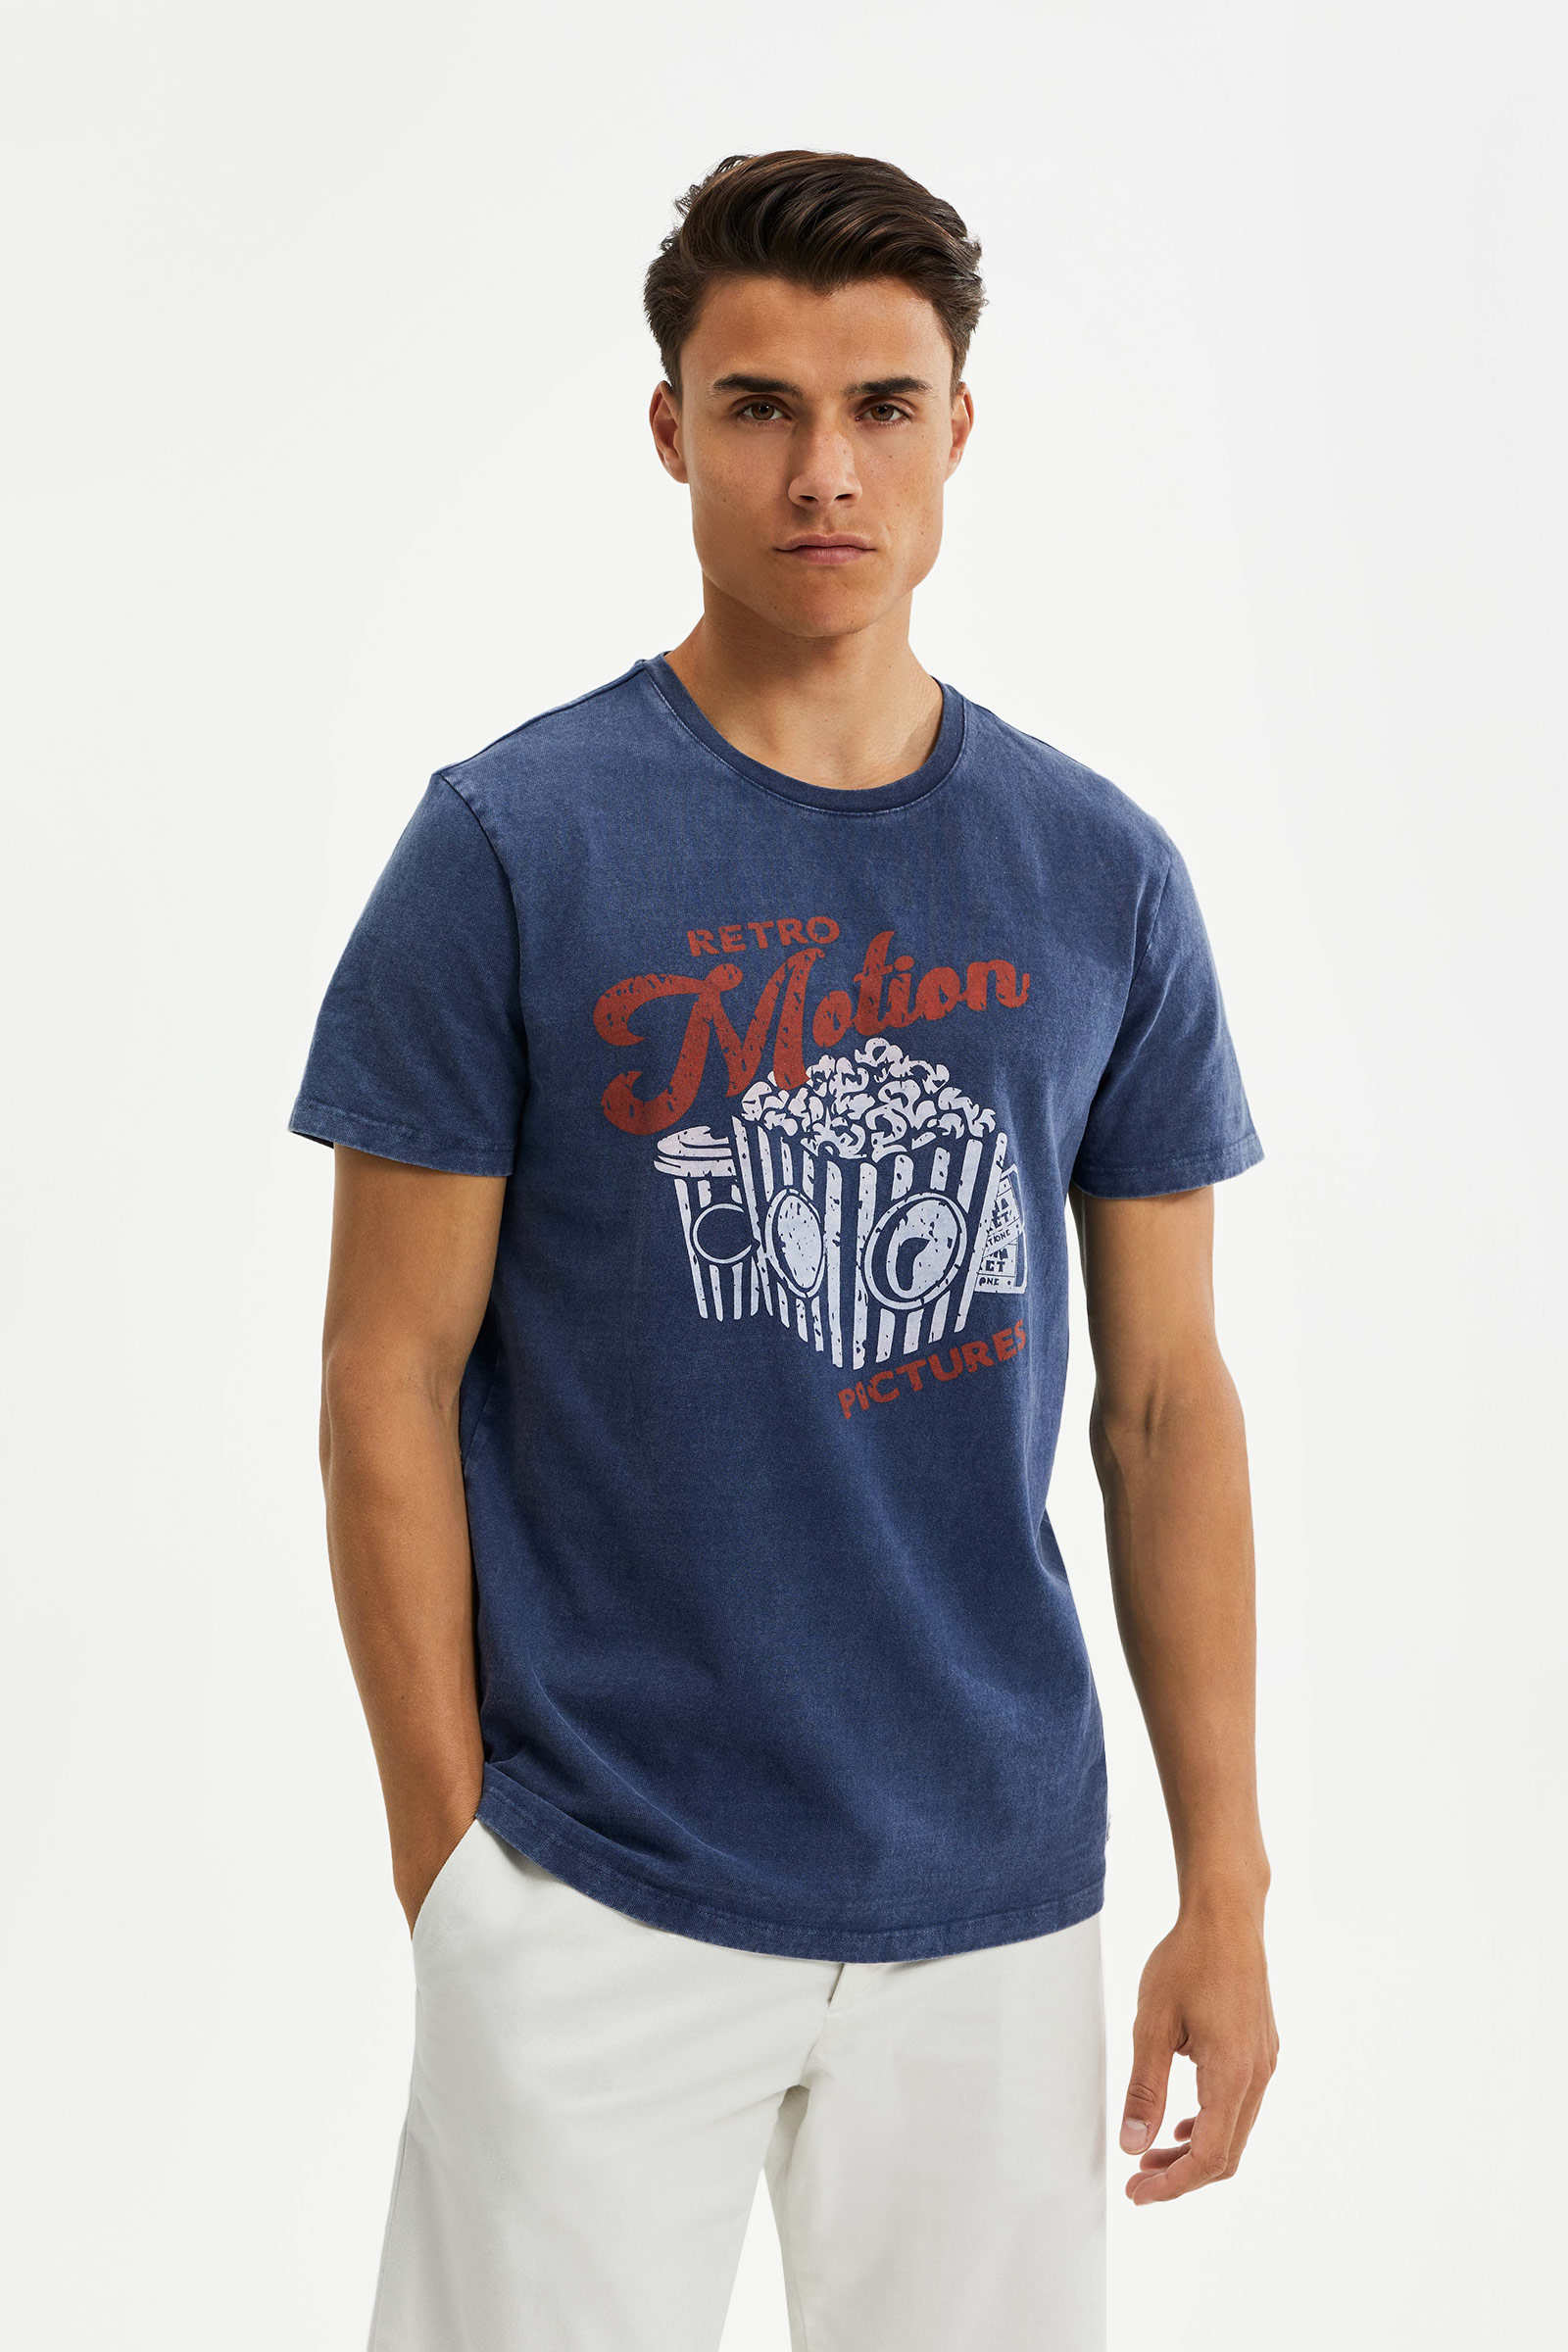 Vintage Datsun Retro Overhemd Kleding Herenkleding Overhemden & T-shirts T-shirts T-shirts met print 